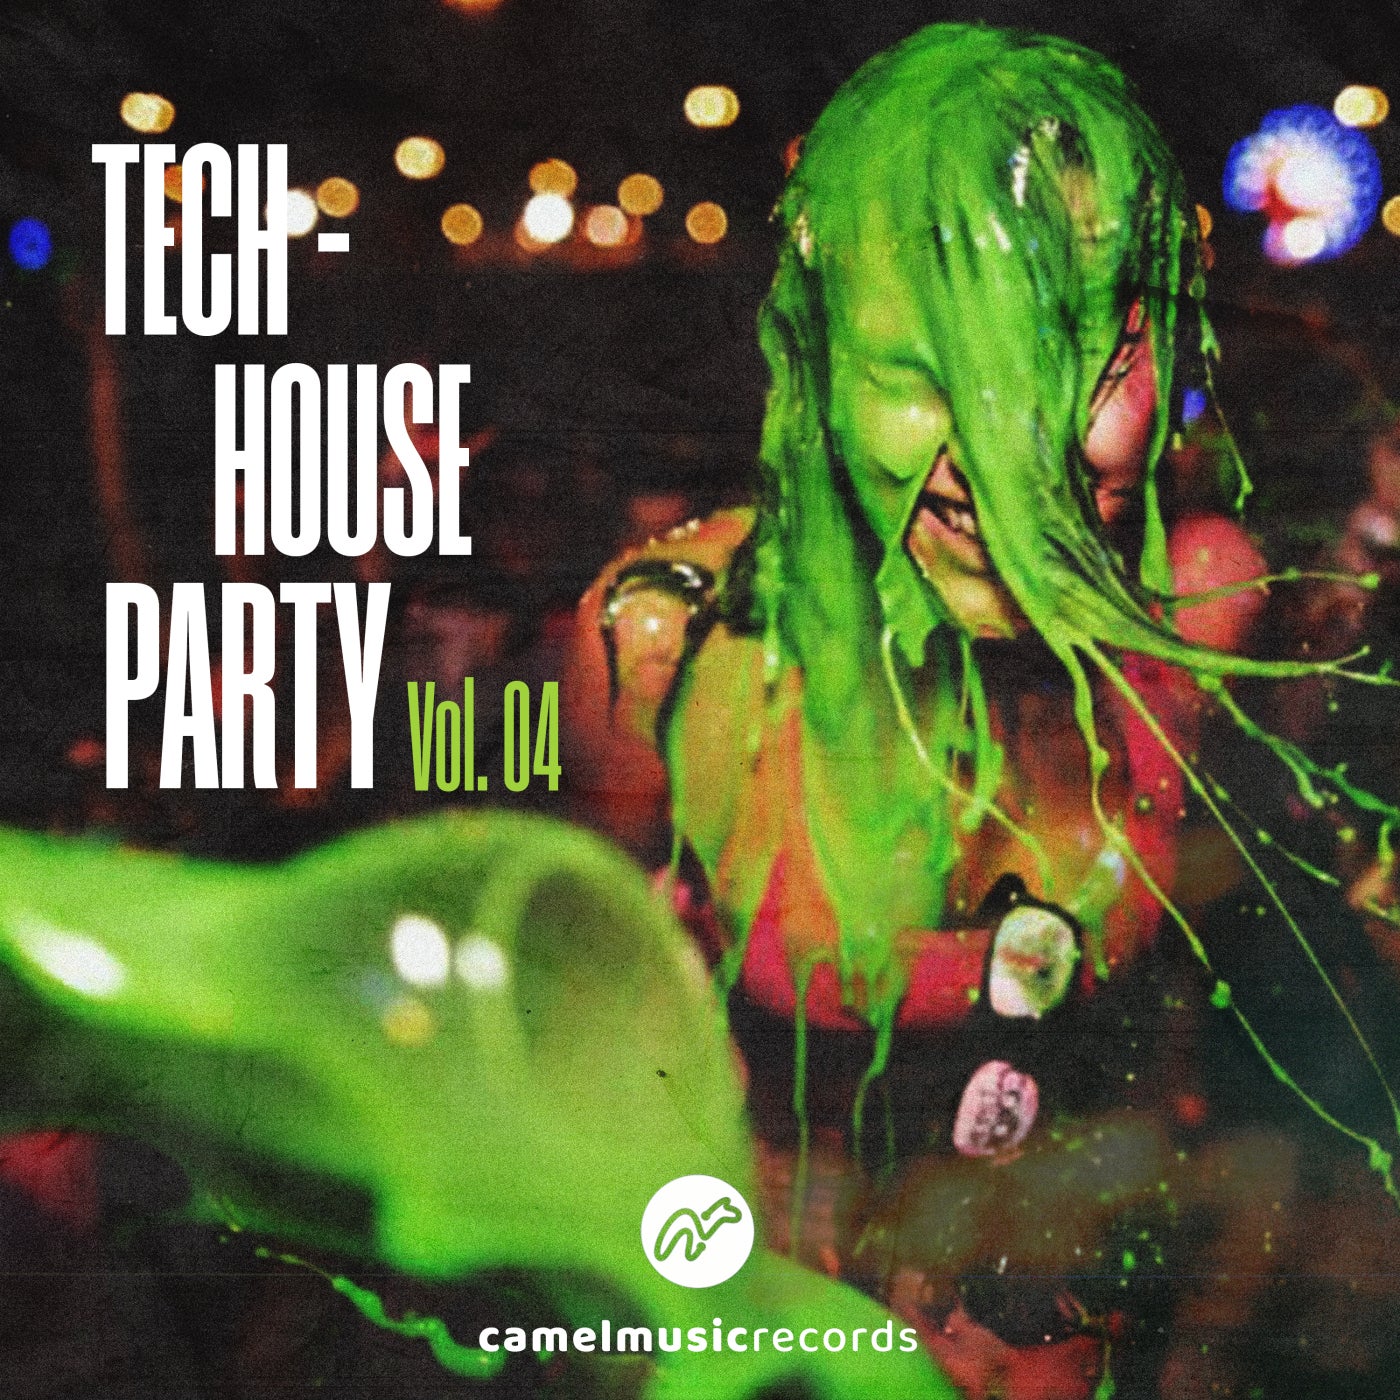 Tech House Party, Vol. 04